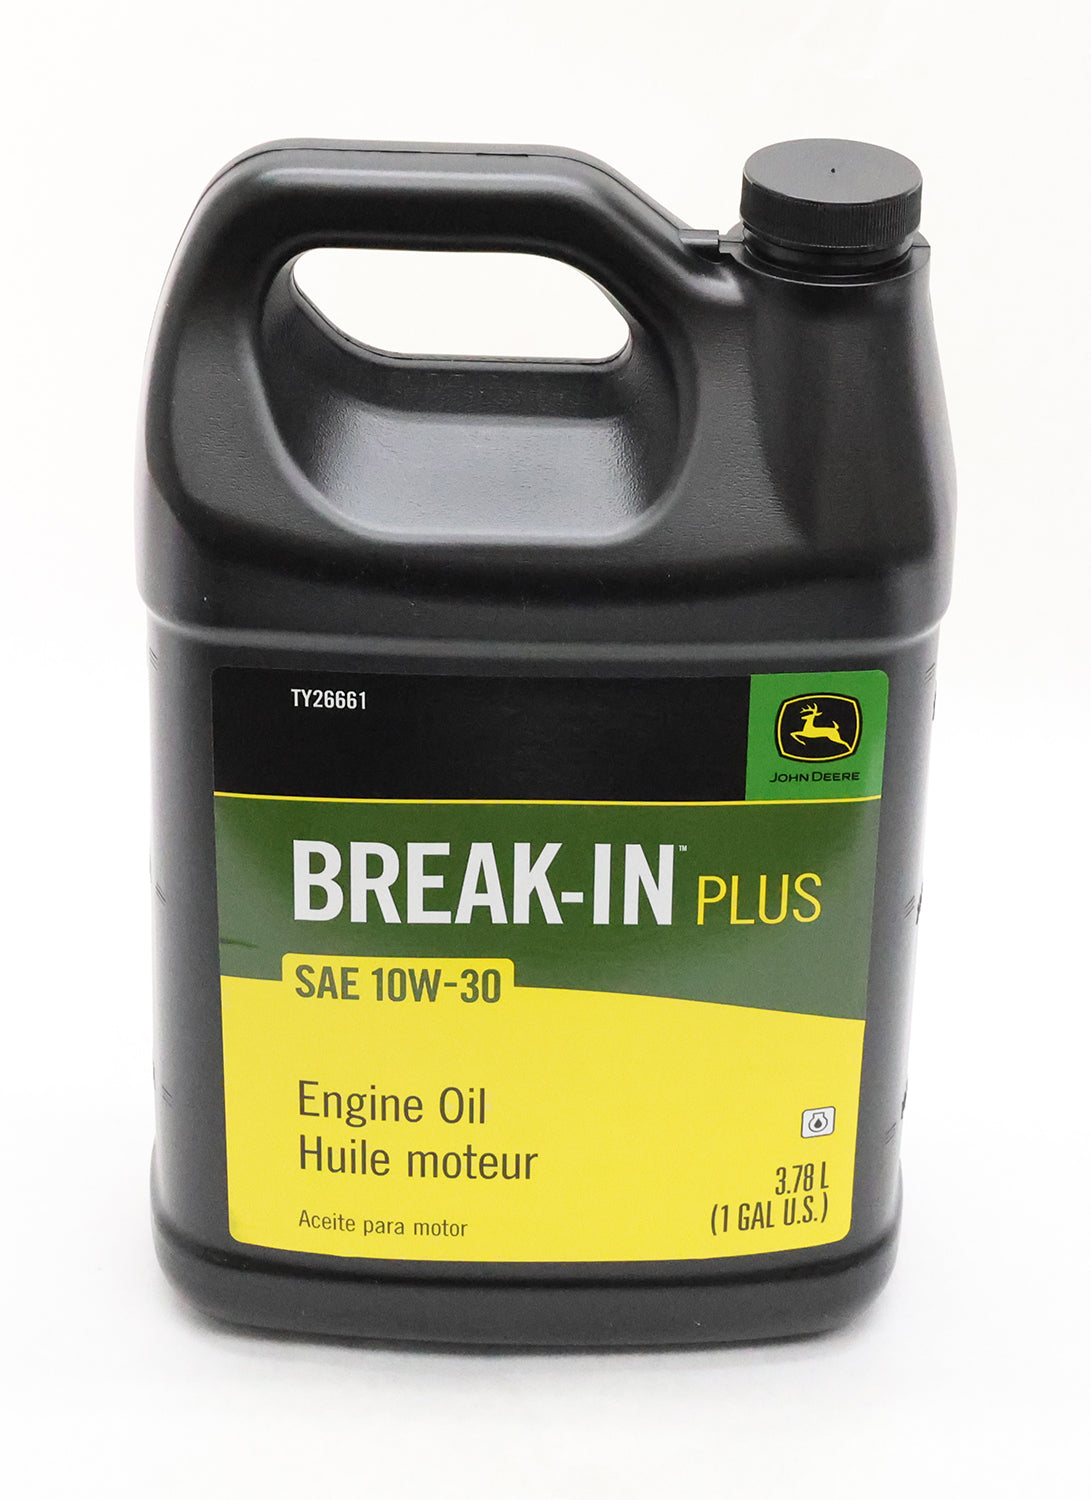 John Deere Original Equipment Break-In Plus Engine Oil - TY26661